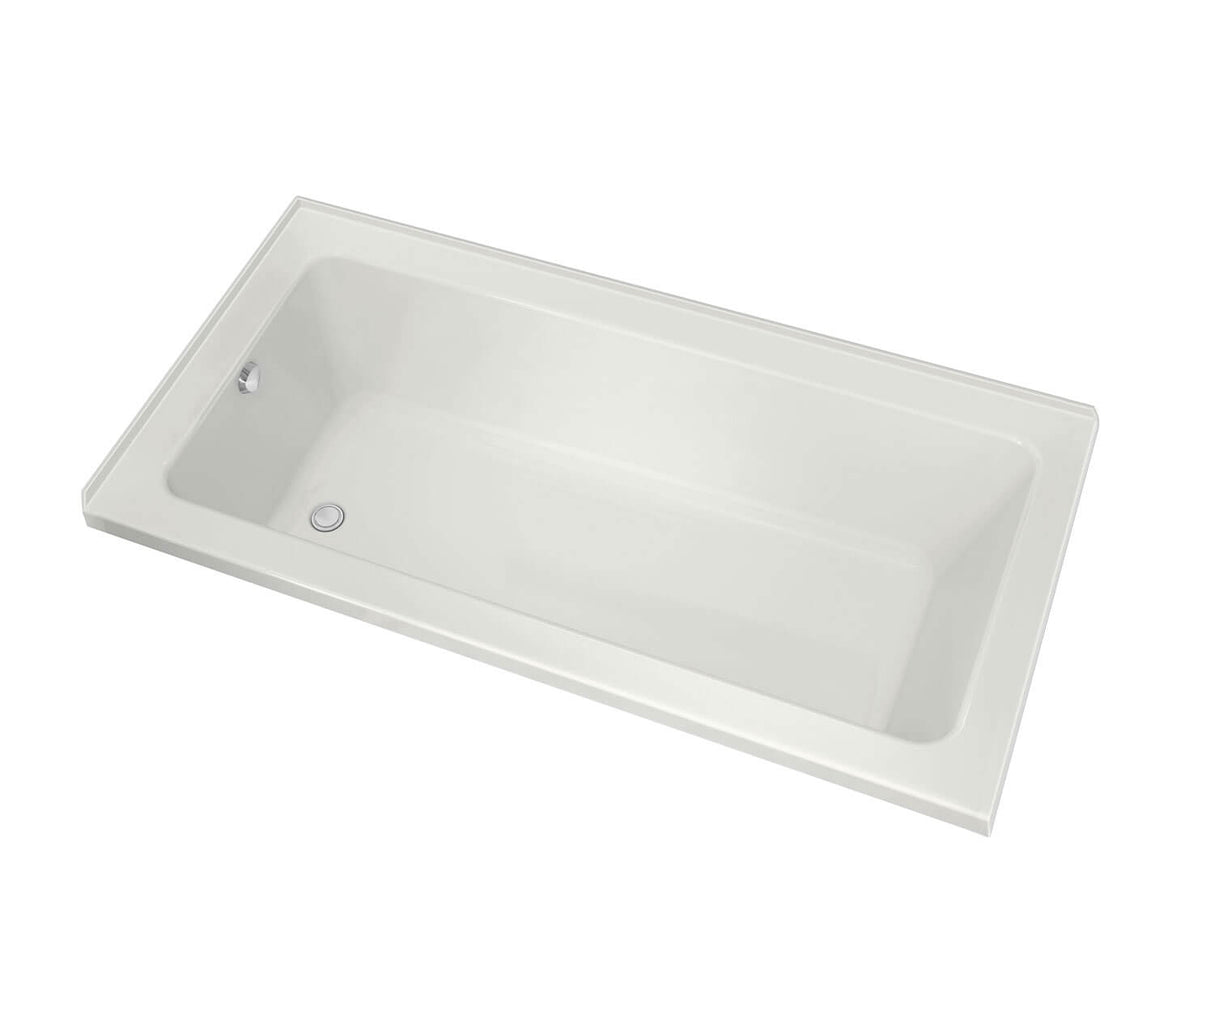 MAAX 106202-L-003-001 Pose 6032 IF Acrylic Corner Left Left-Hand Drain Whirlpool Bathtub in White